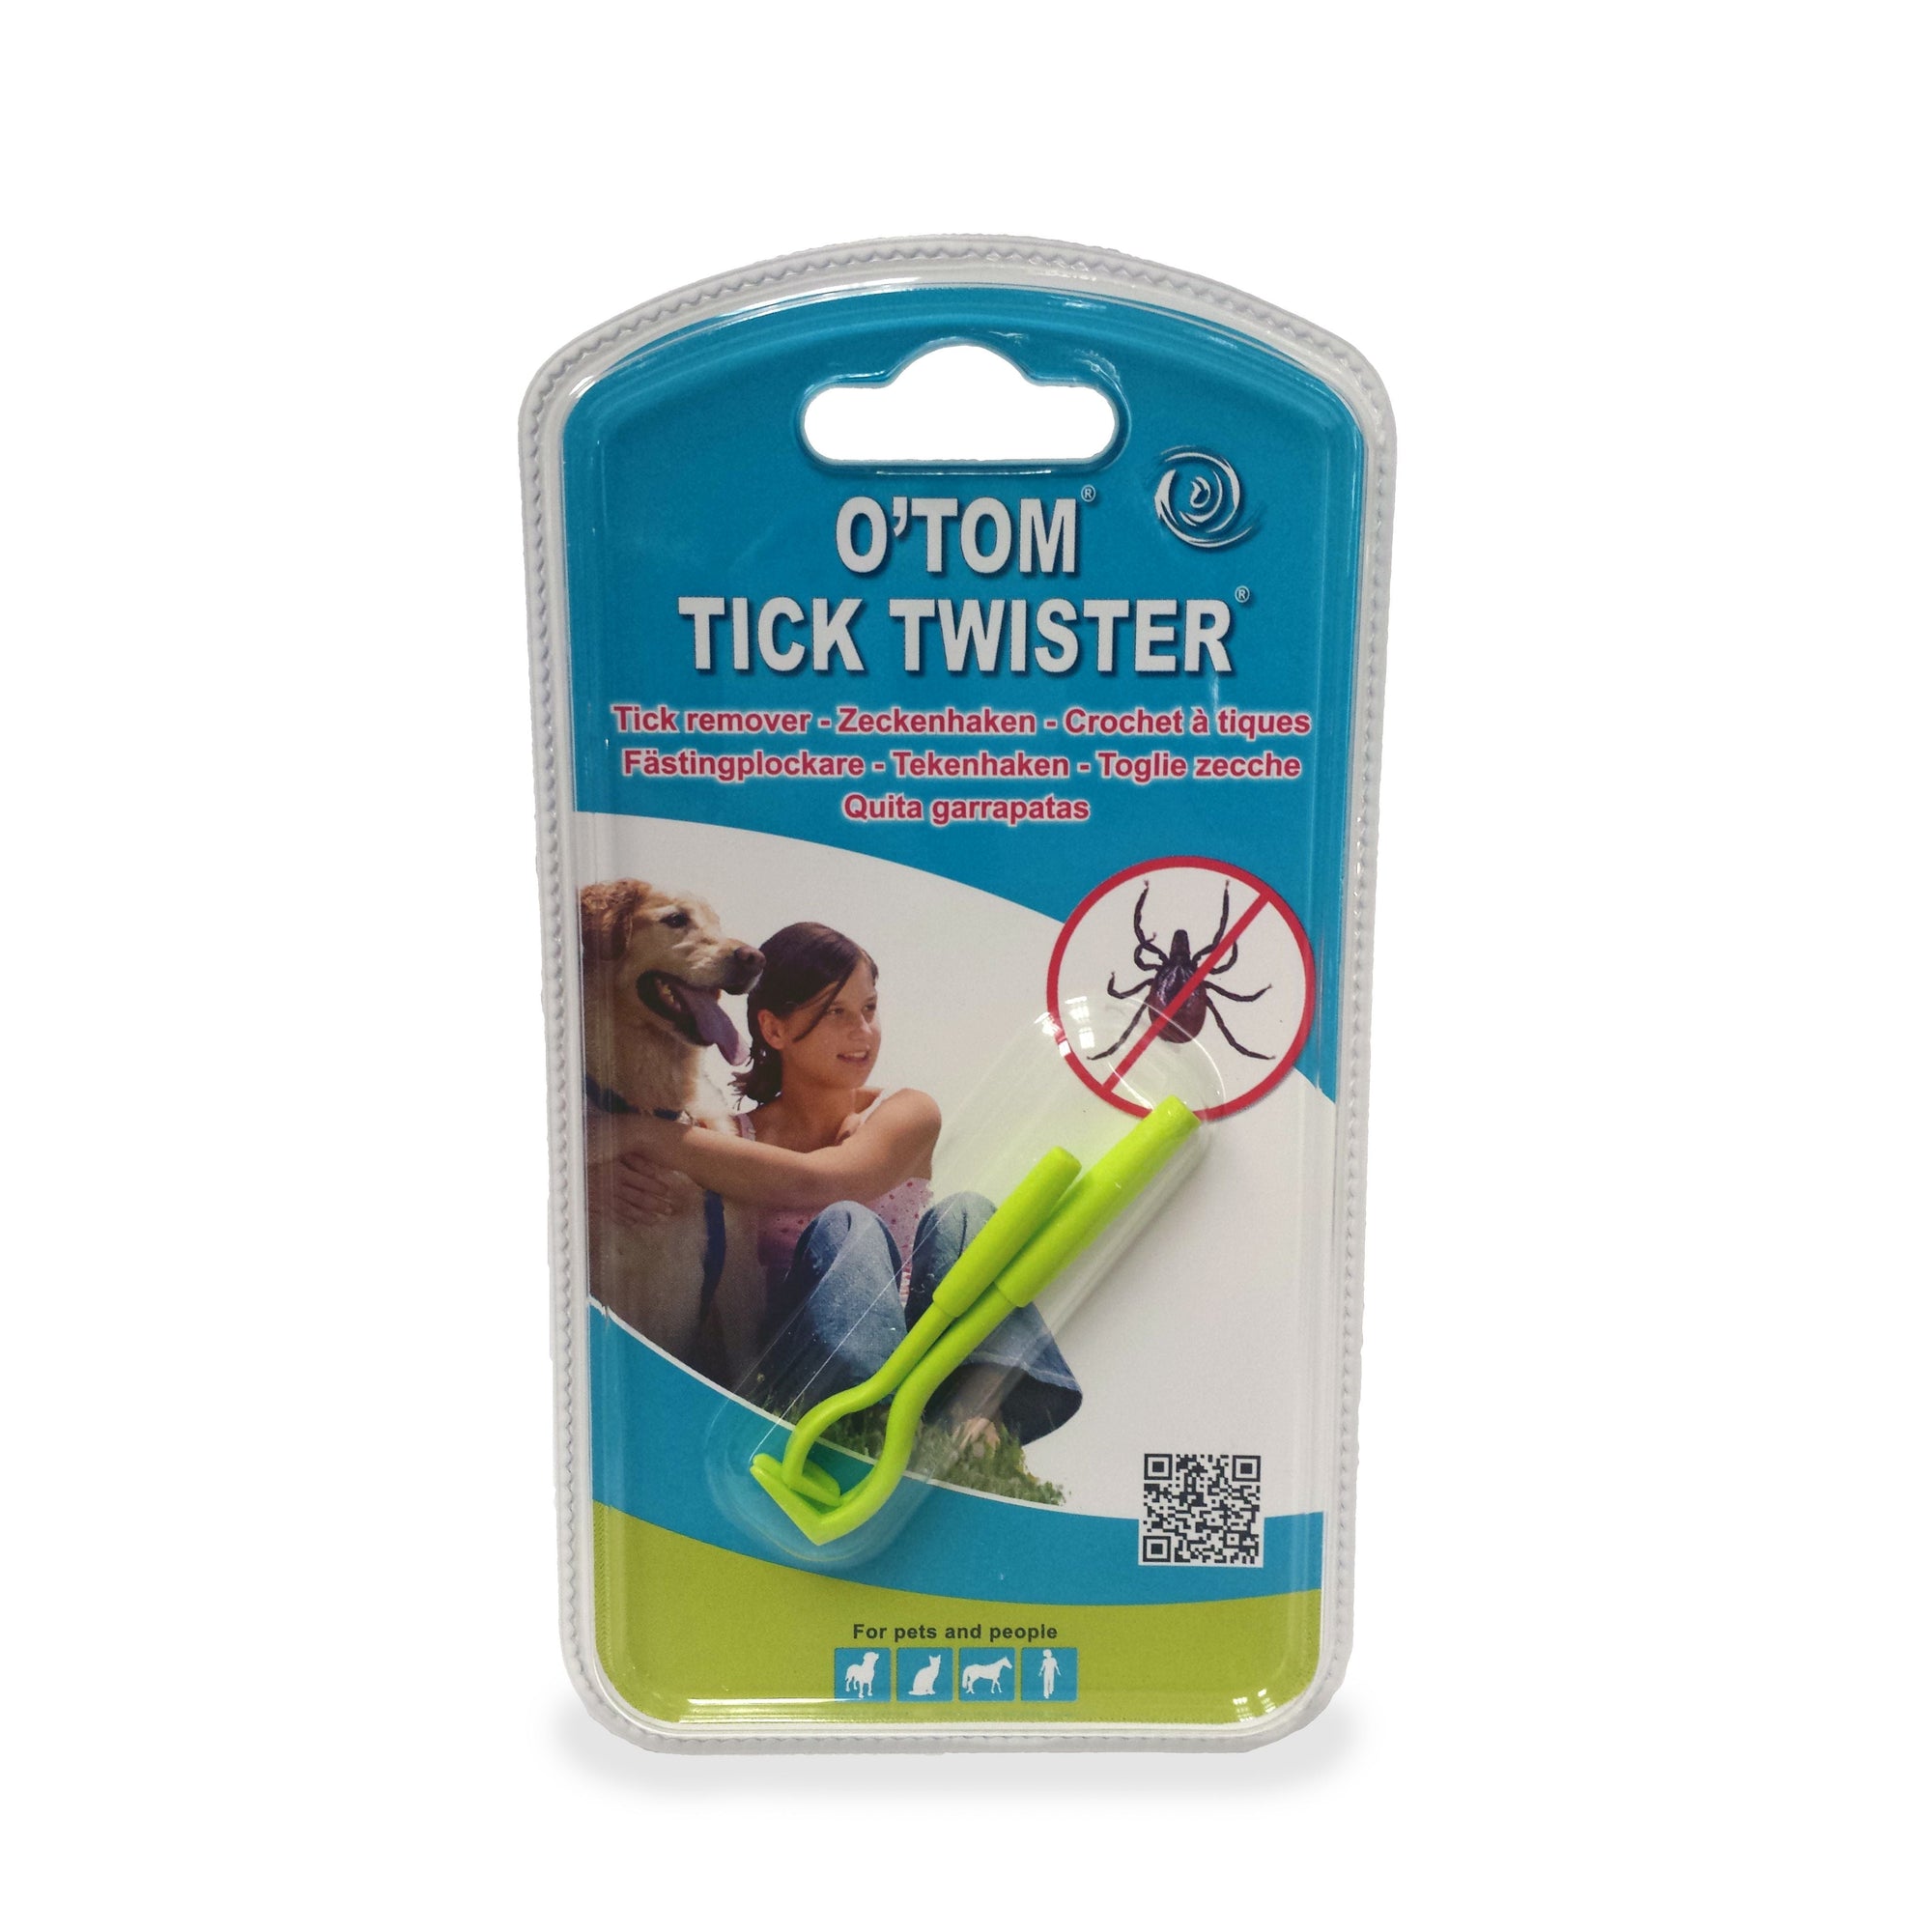 O'tom tick twister Crochet à Tiques, Tick Twister